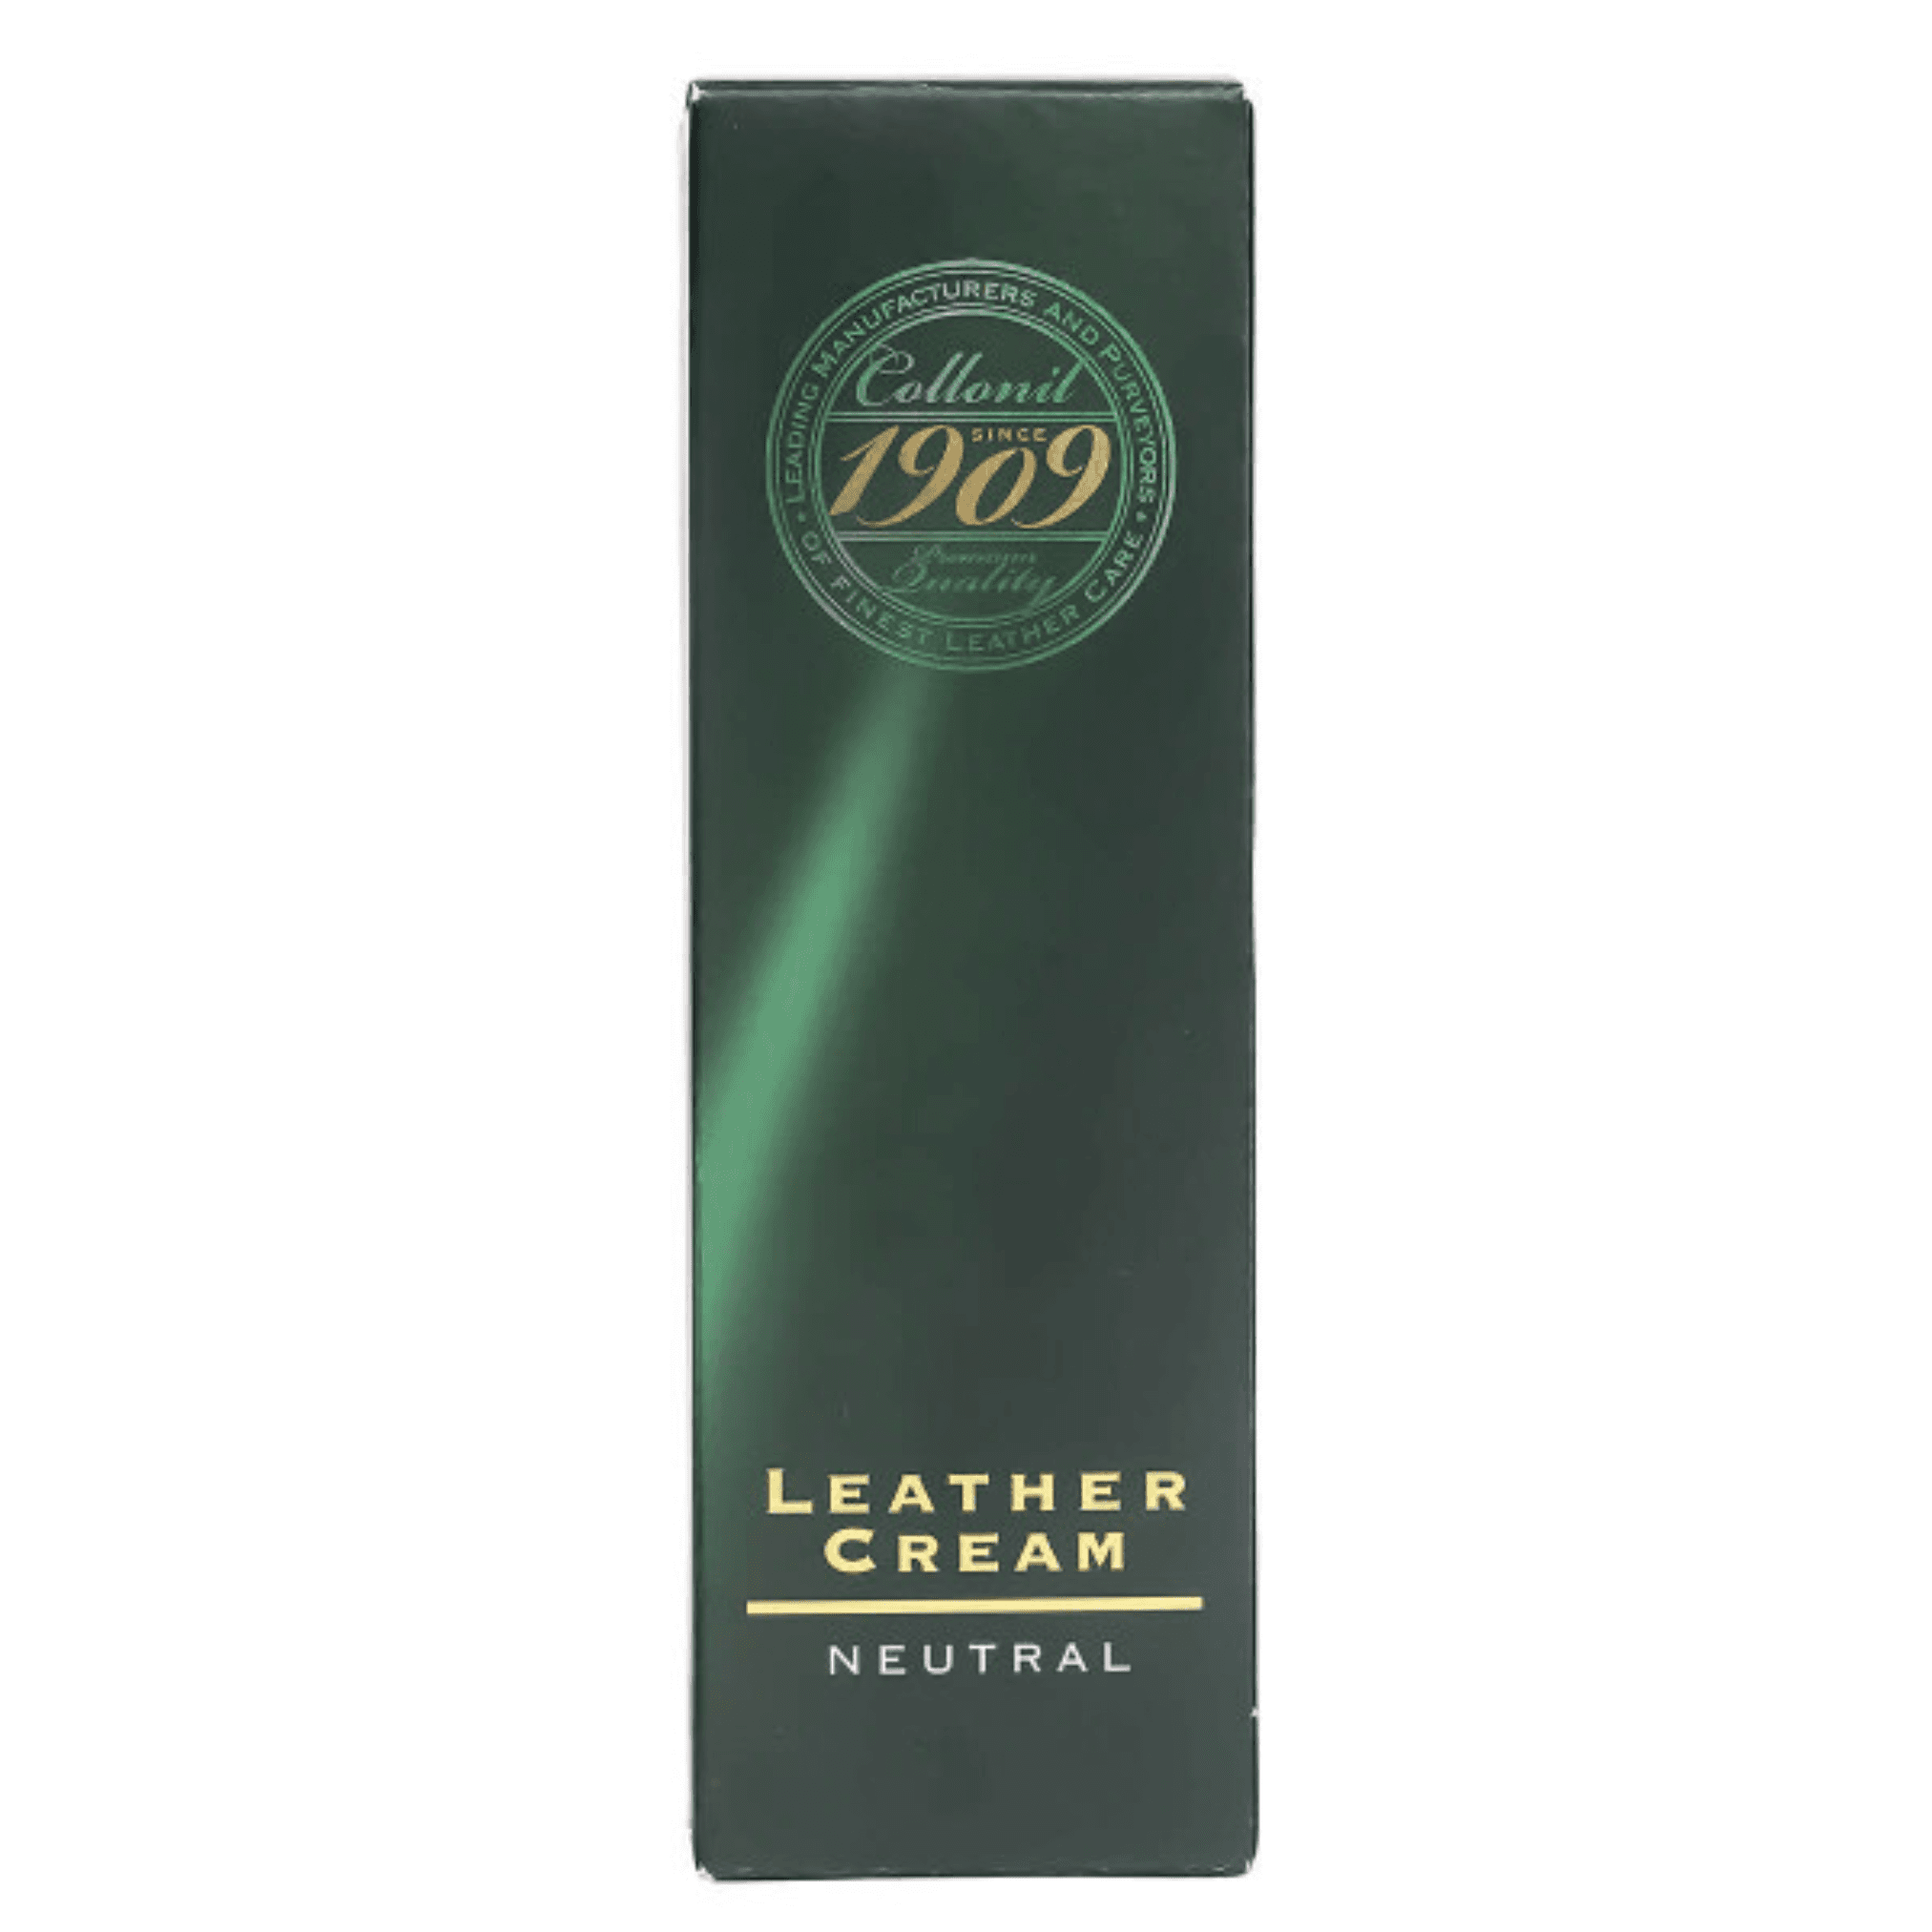 1909 Leather Cream - Care